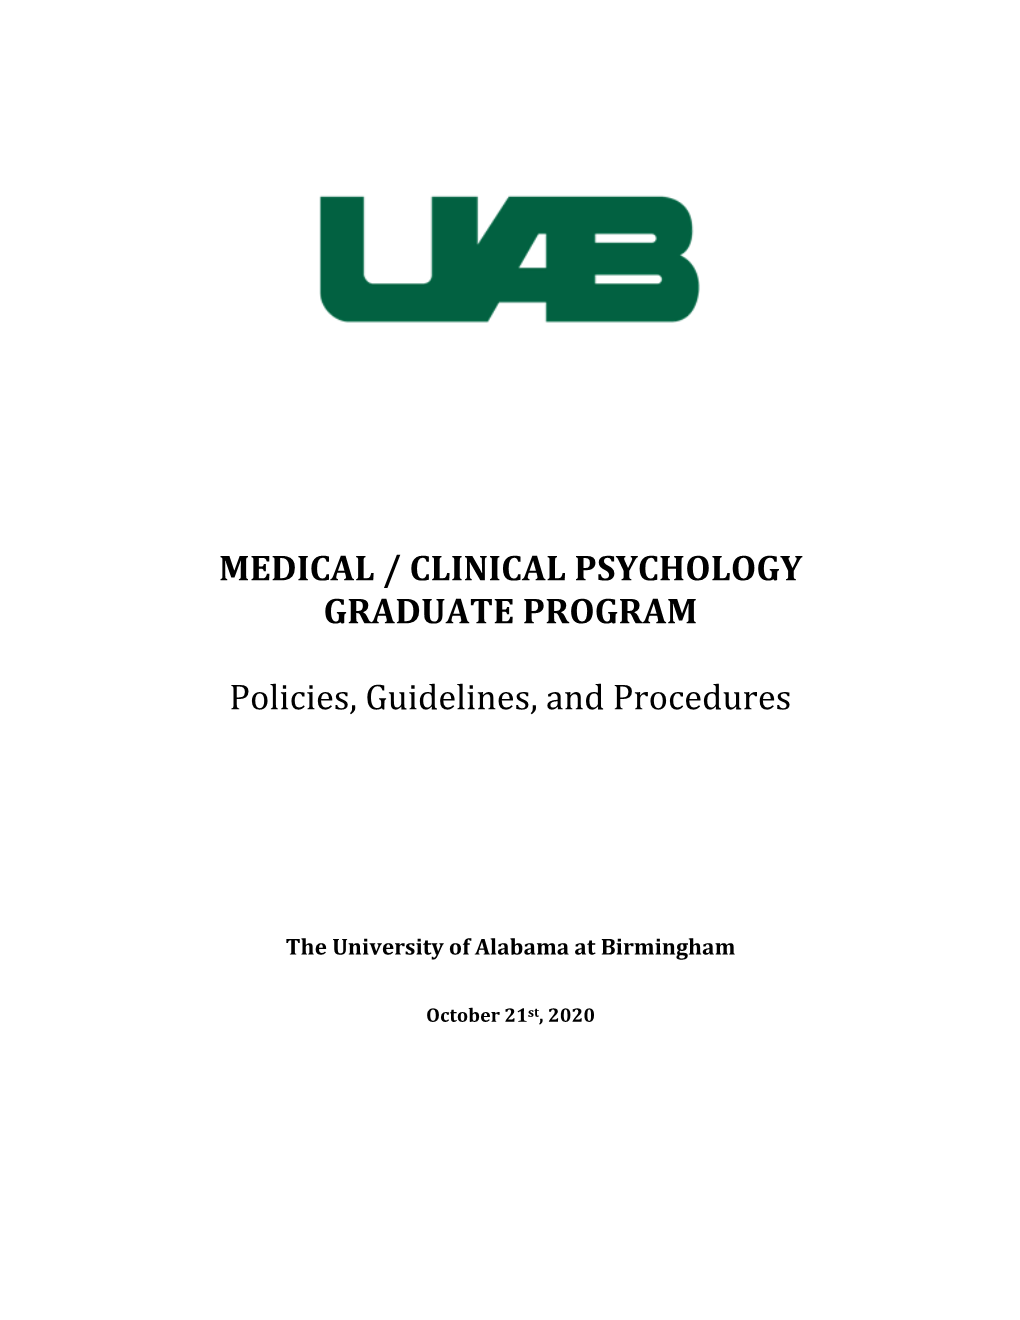 MEDICAL / CLINICAL PSYCHOLOGY GRADUATE PROGRAM Policies